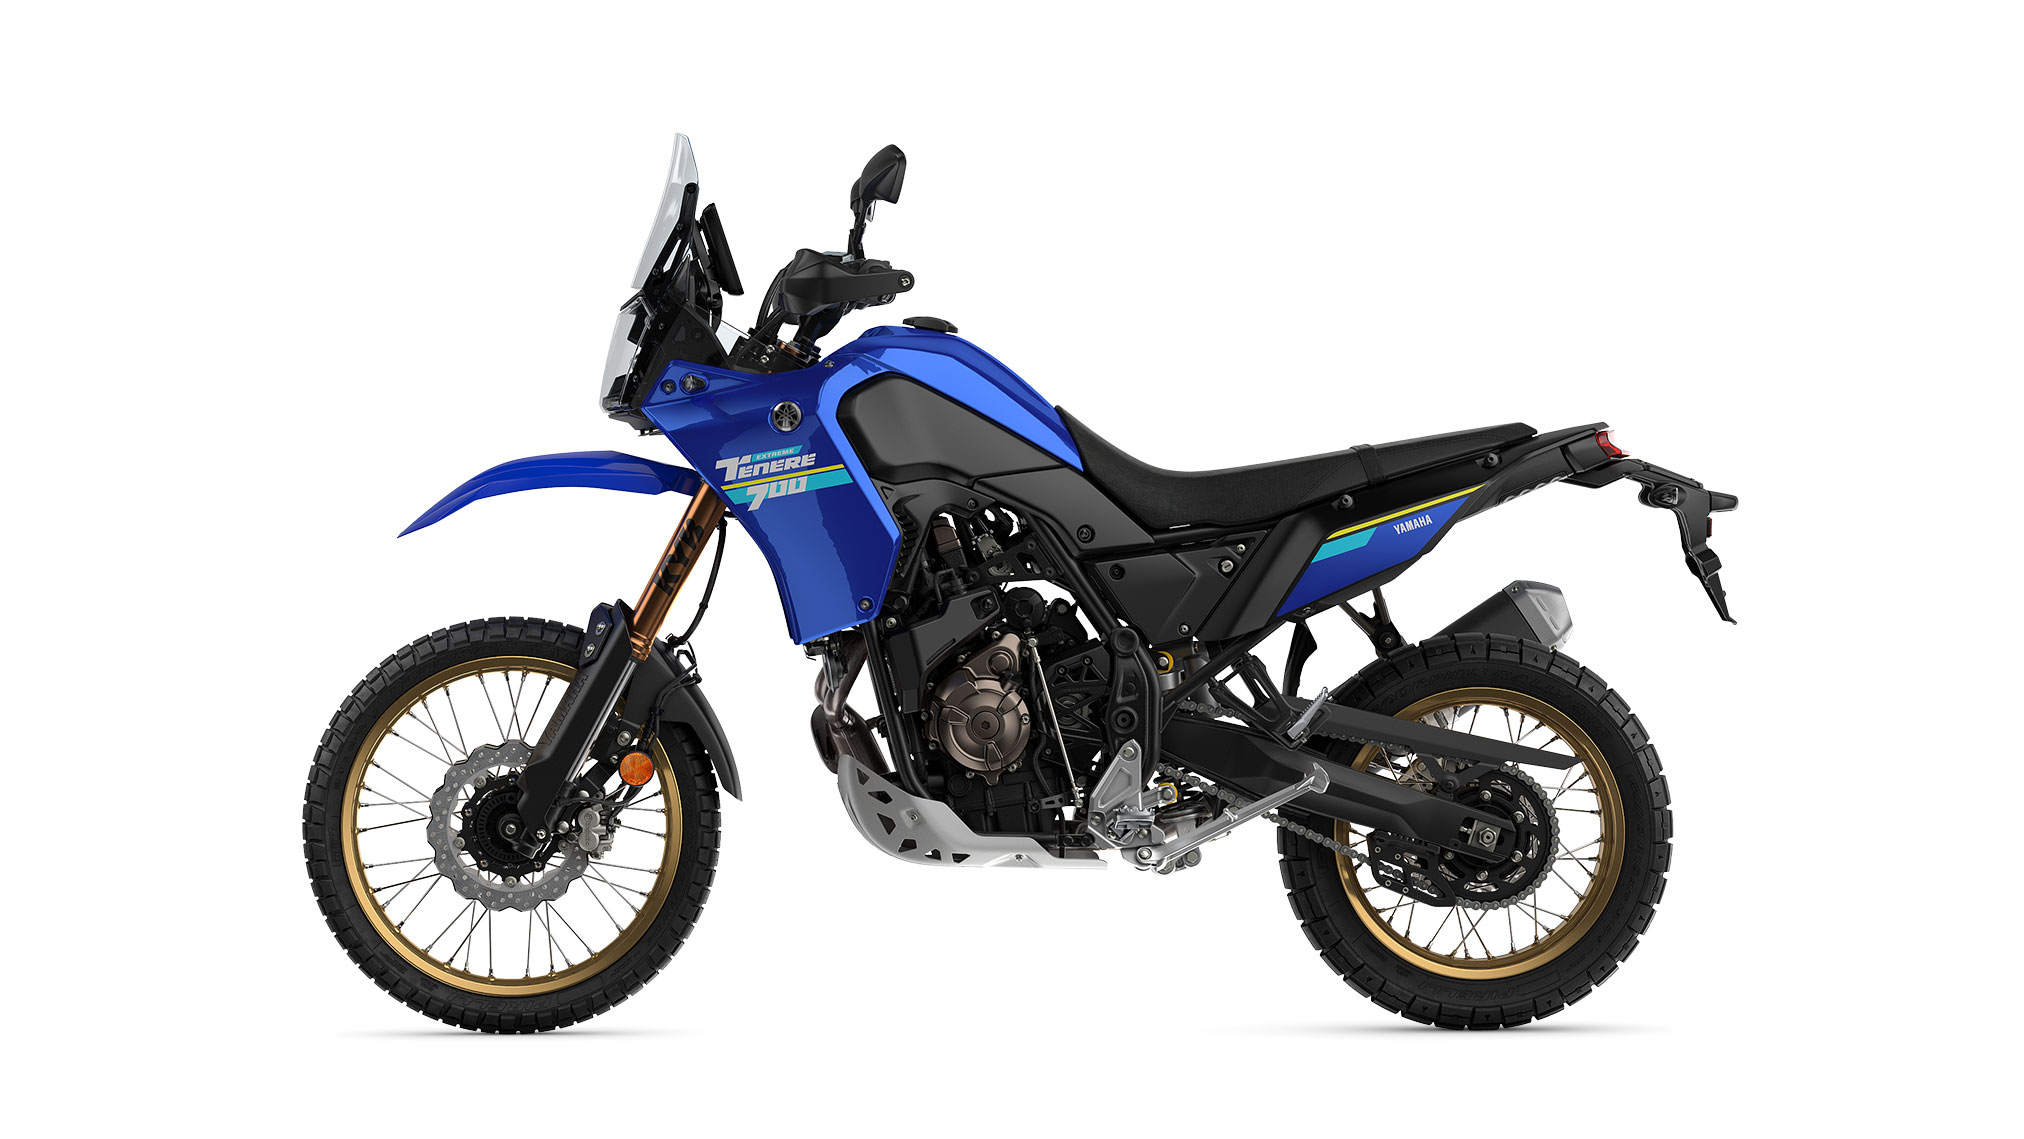 Yamaha Tenere 700 Explore and Extreme ADV Bikes Released: Specs